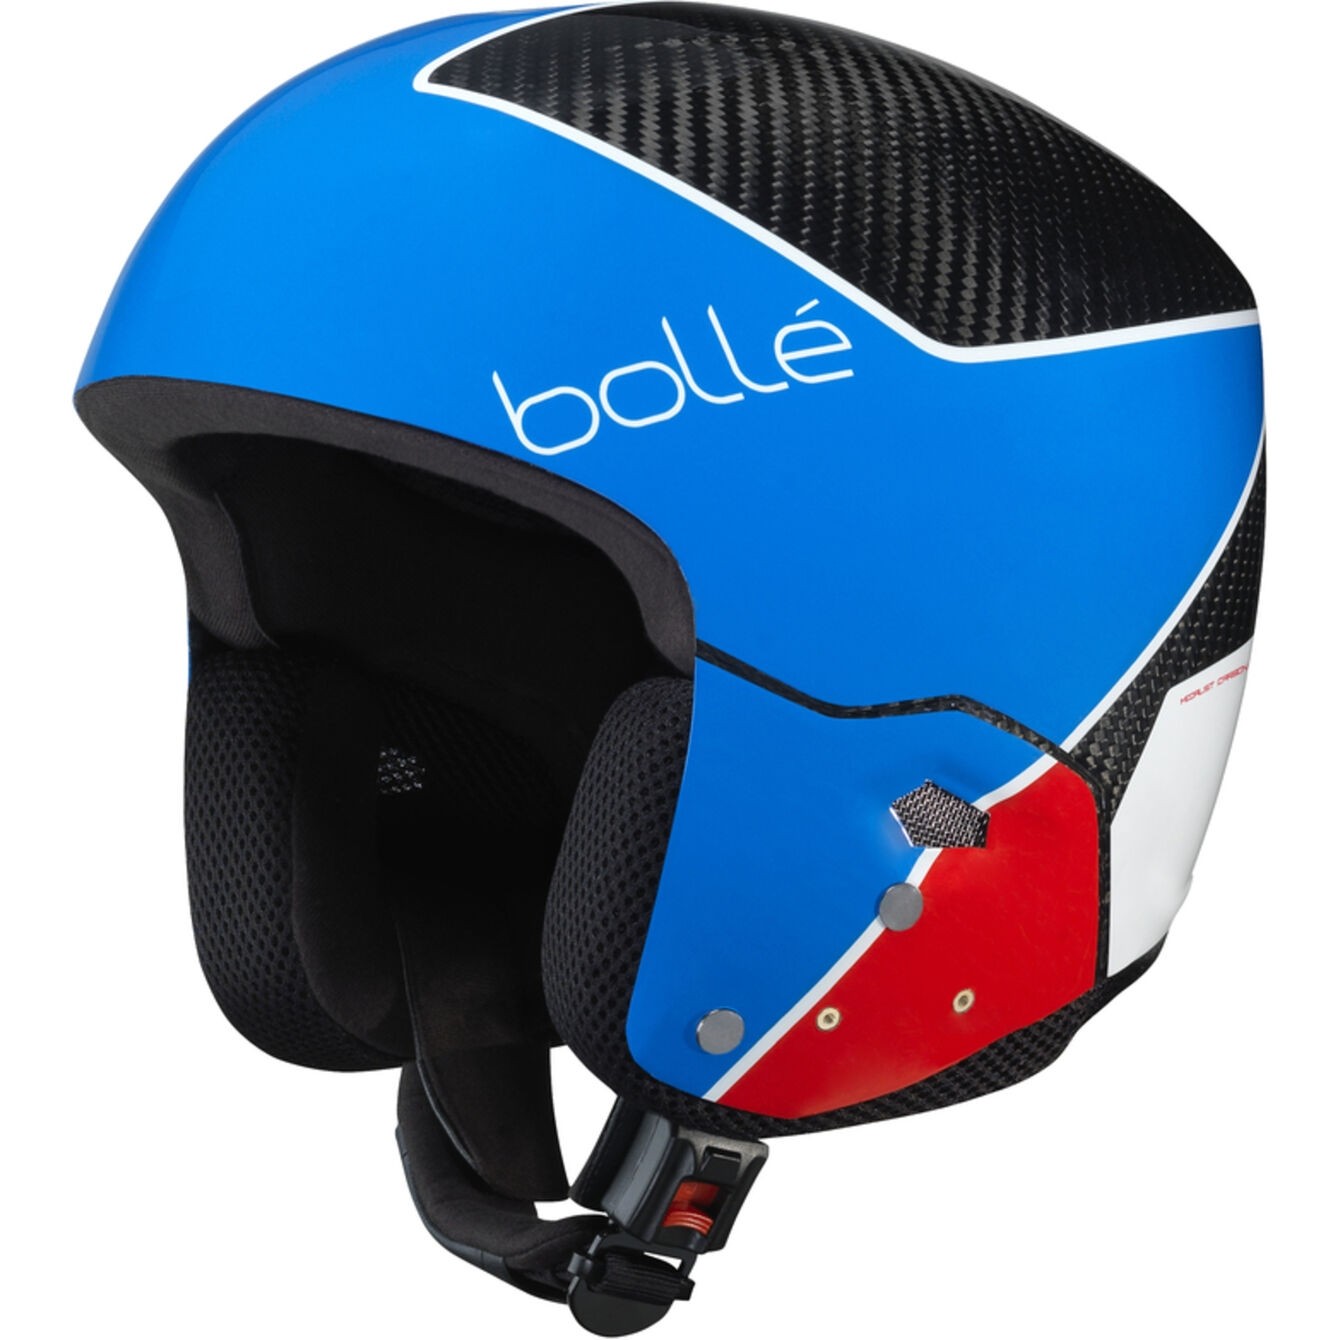 Seraph Stemmen Excentriek Bollé Medalist Carbon Pro FIS Blue Shiny ski helmet